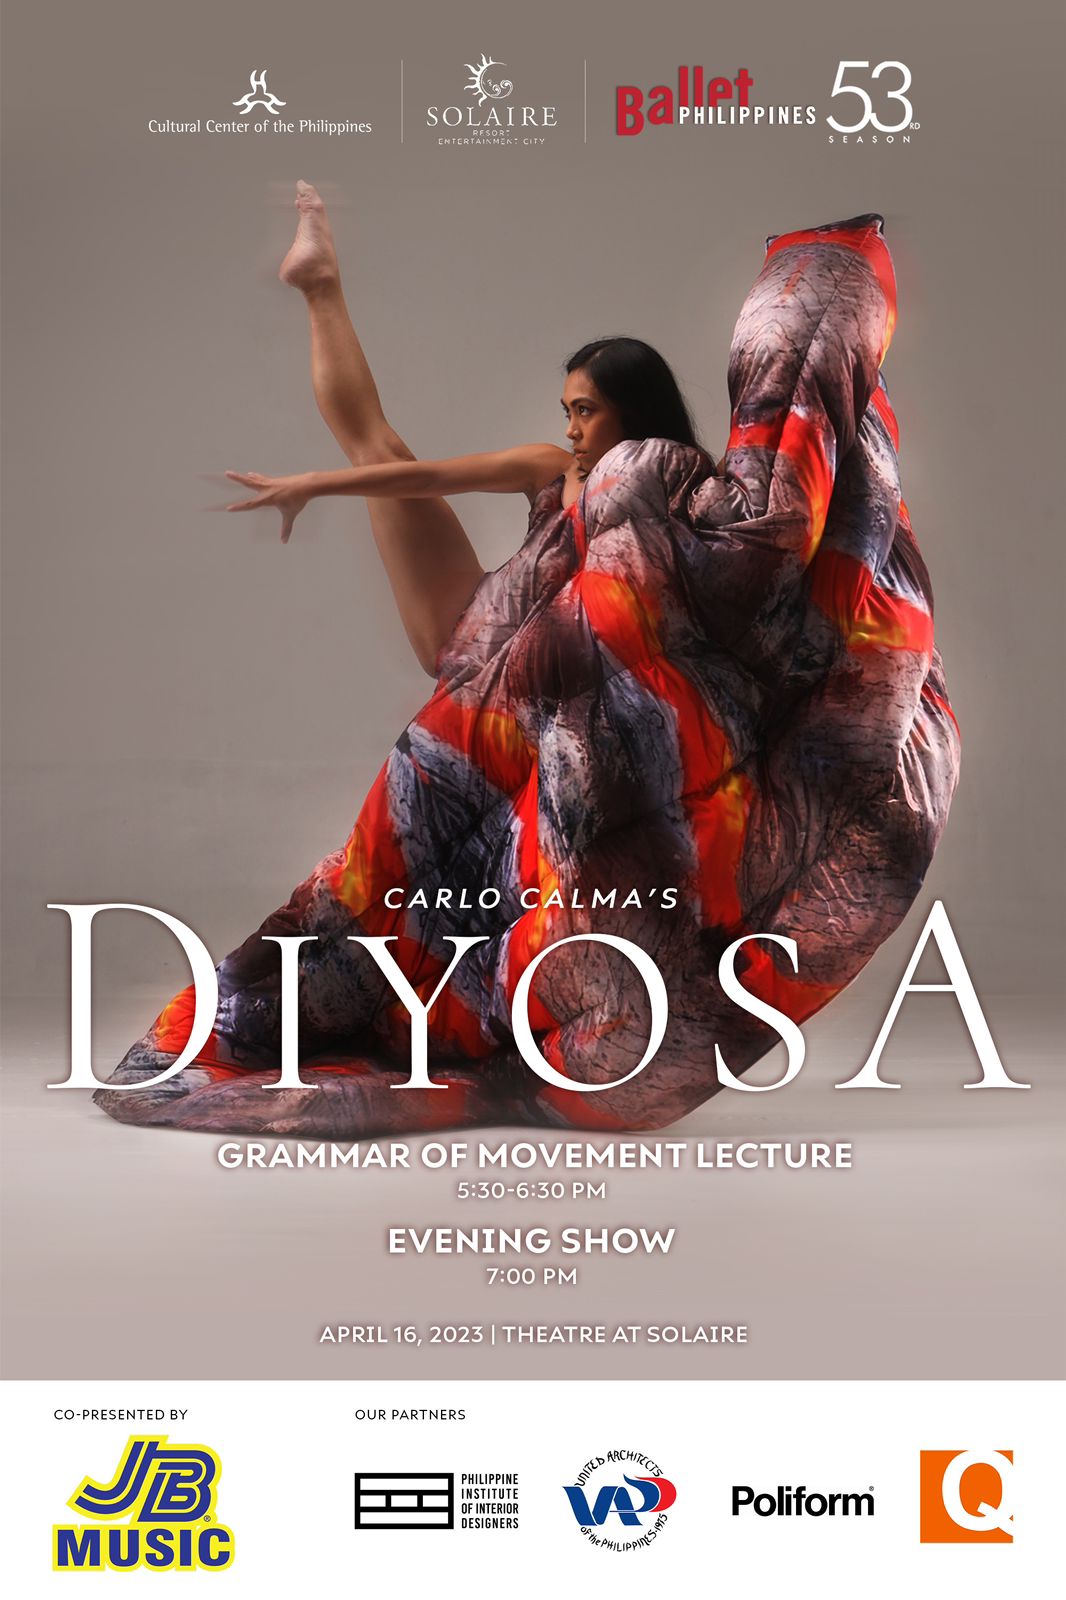 Grammar of Movement by Carlo Calma and evening show of Diyosa Ballet Manila Interior Design Summit 2023